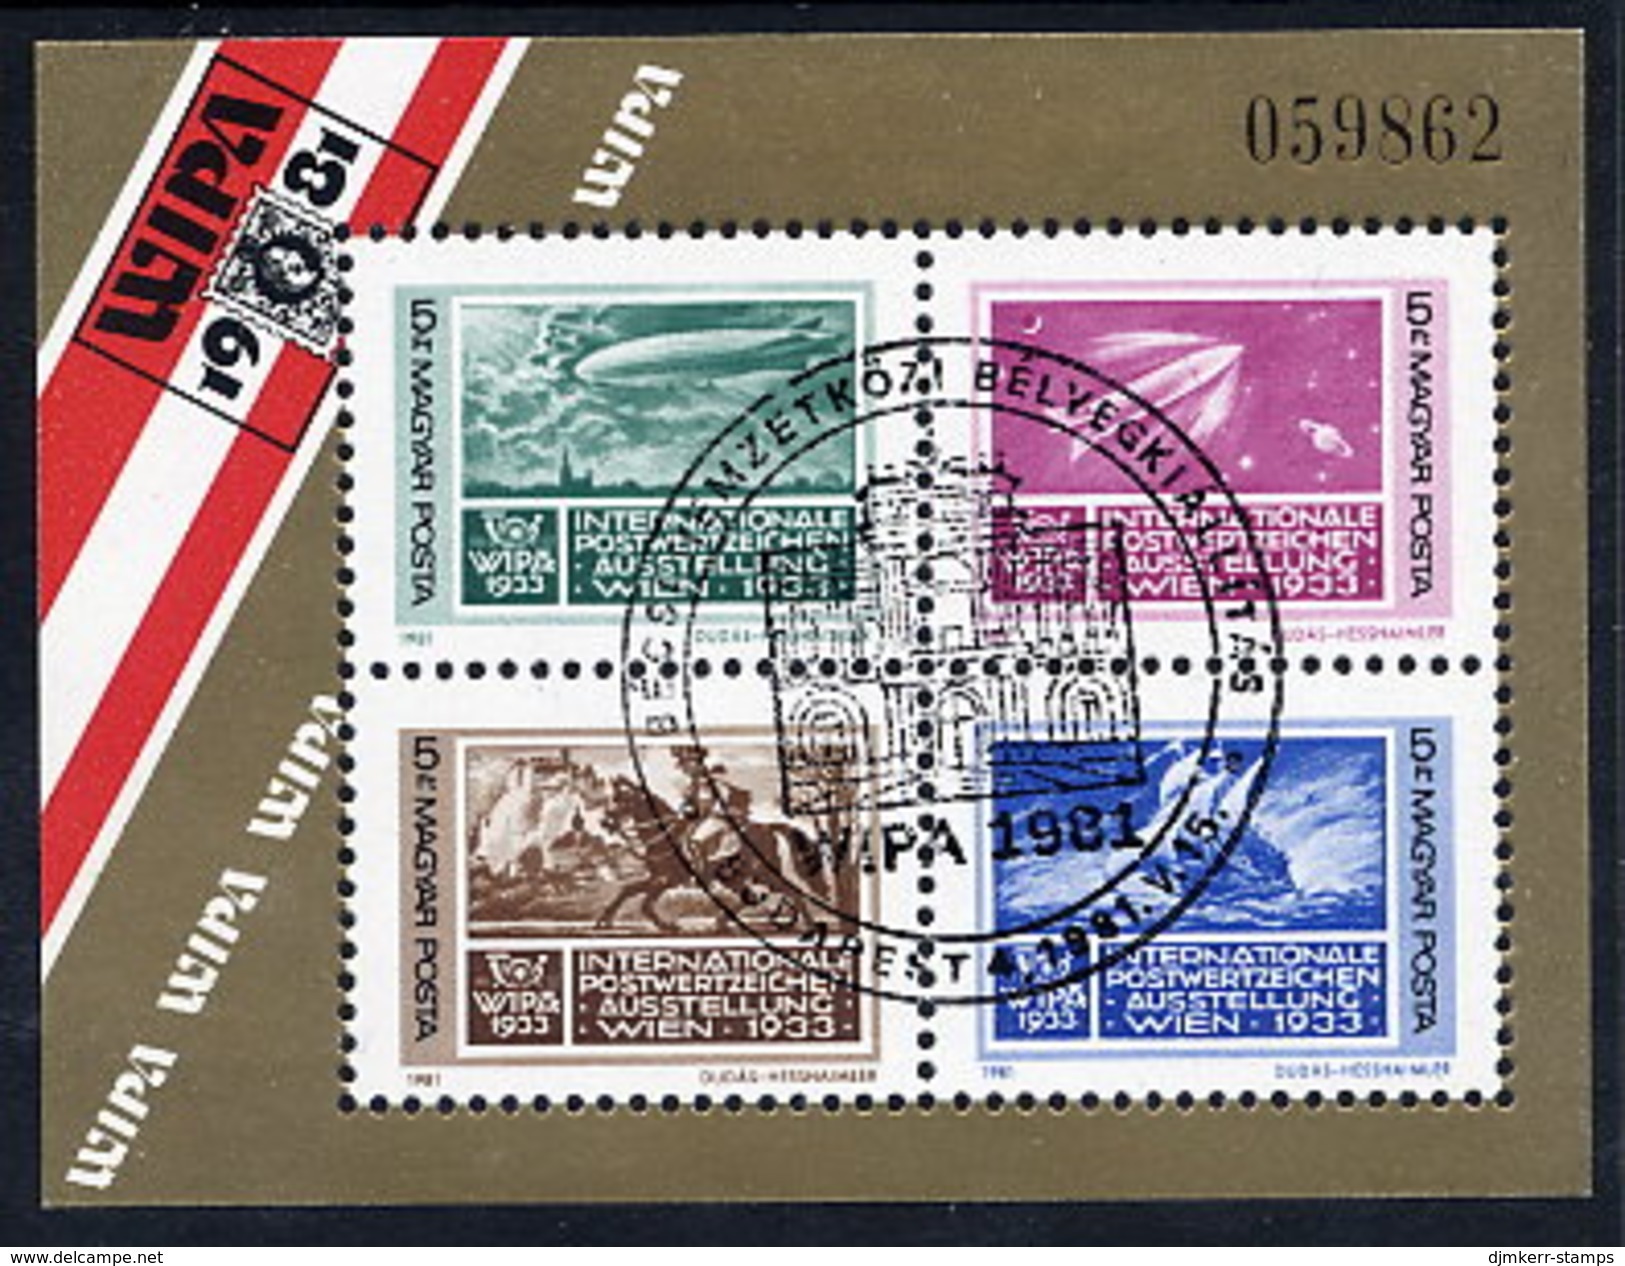 HUNGARY 1981 WIPA Stamp Exhibition Block Used.  Michel Block 150 - Gebraucht